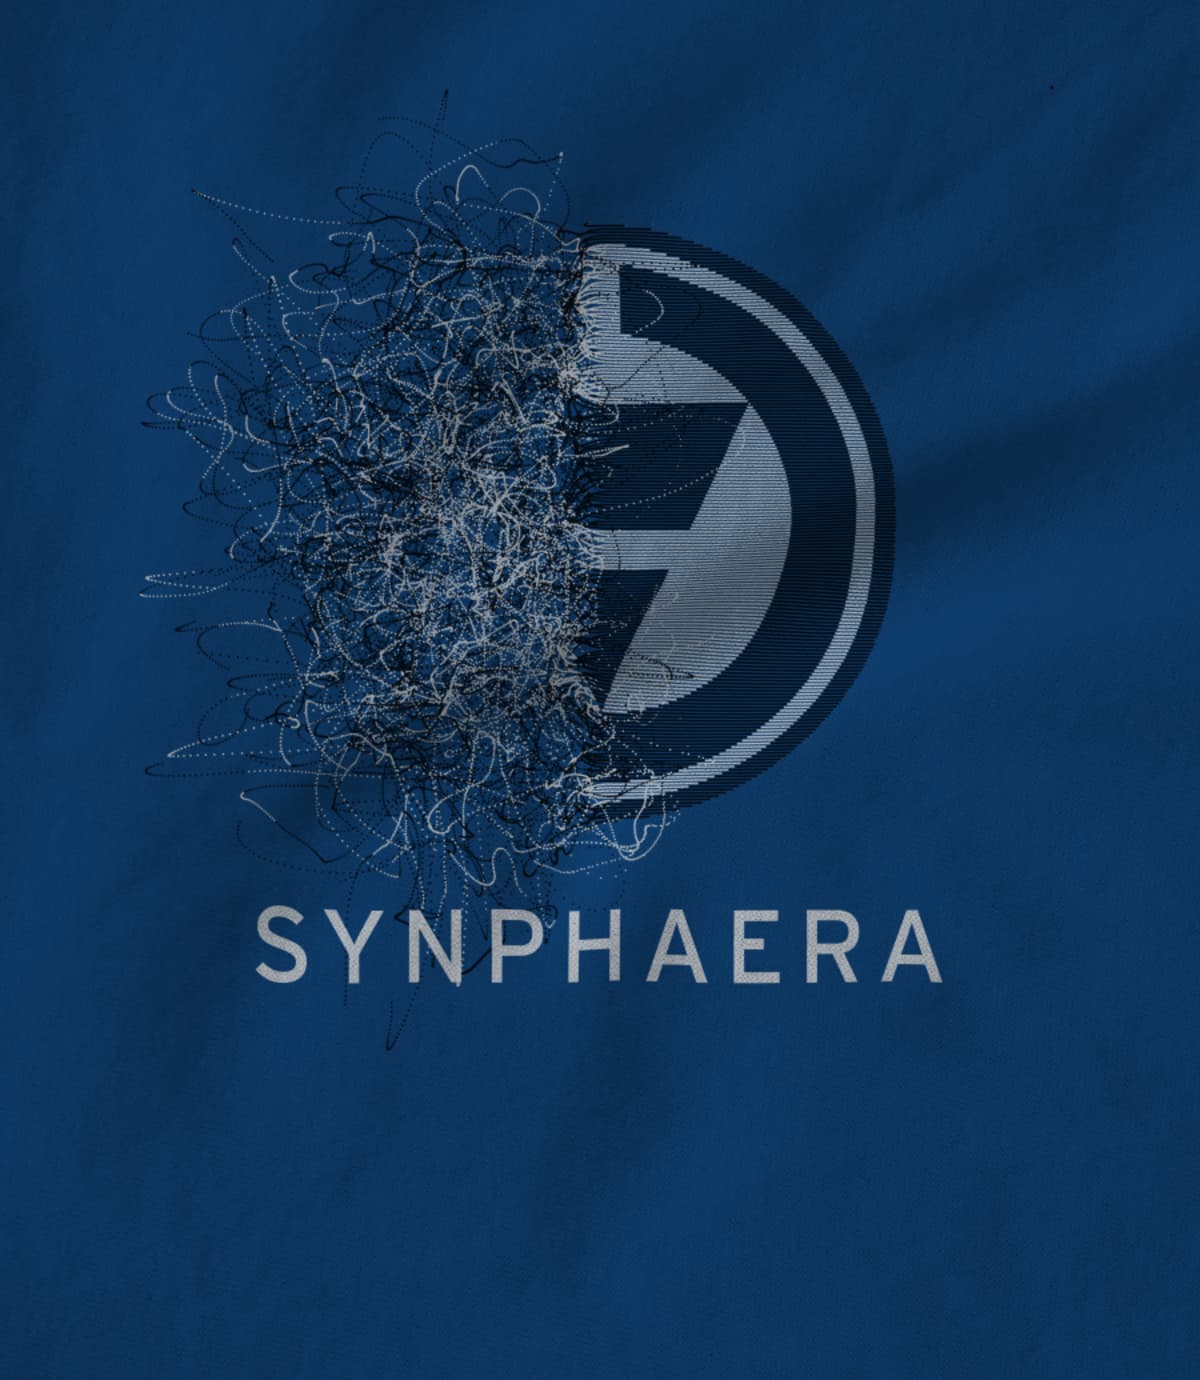 Synphaera synphaera new design 7 1521850308 gg91jm